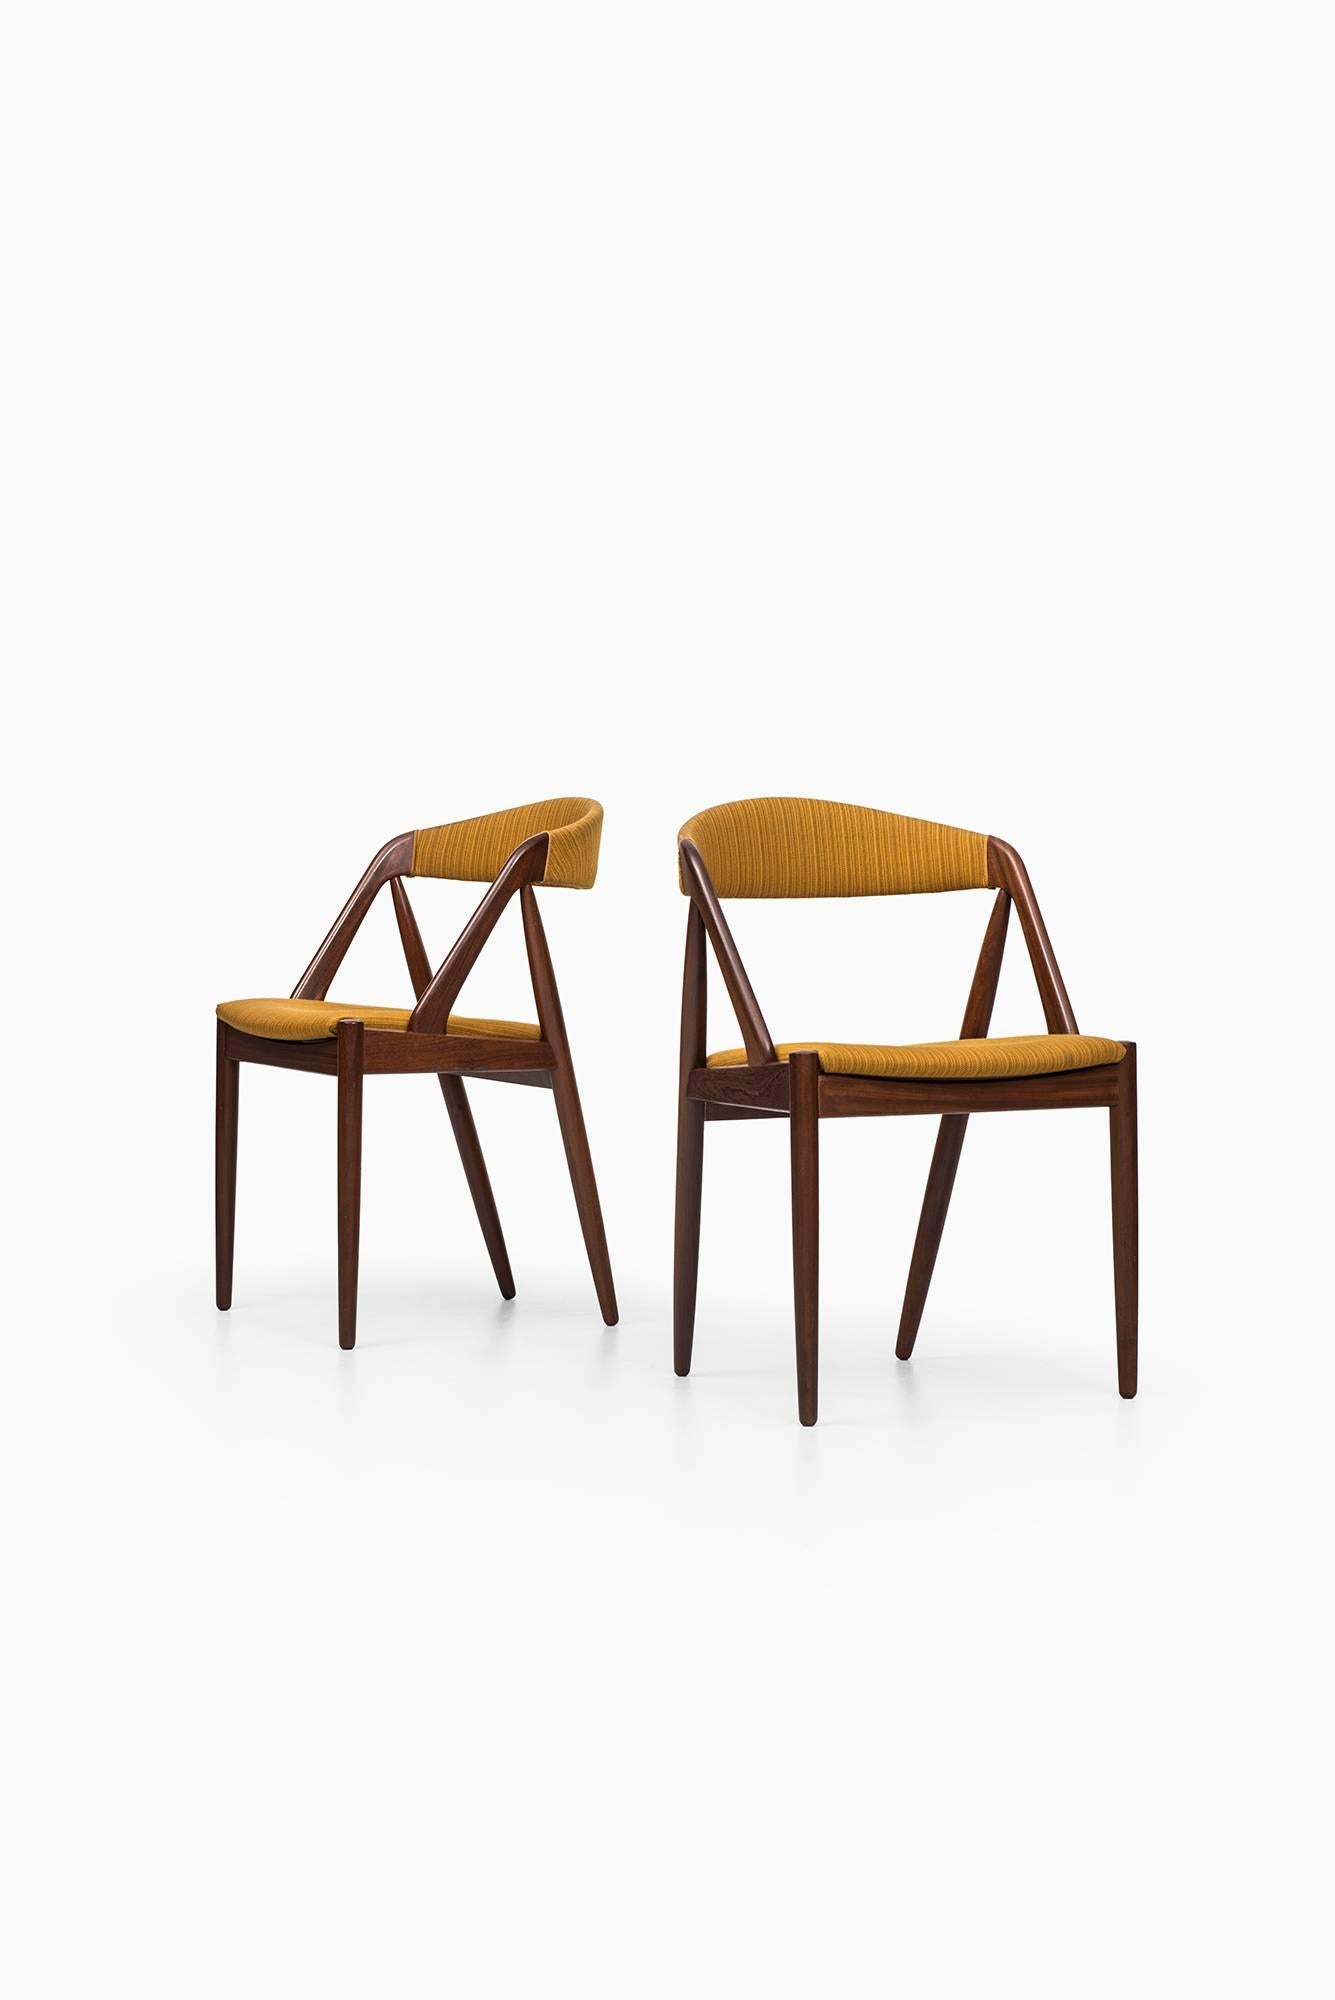 Scandinavian Modern Kai Kristiansen Dining Chairs by Schou Andersen in Denmark